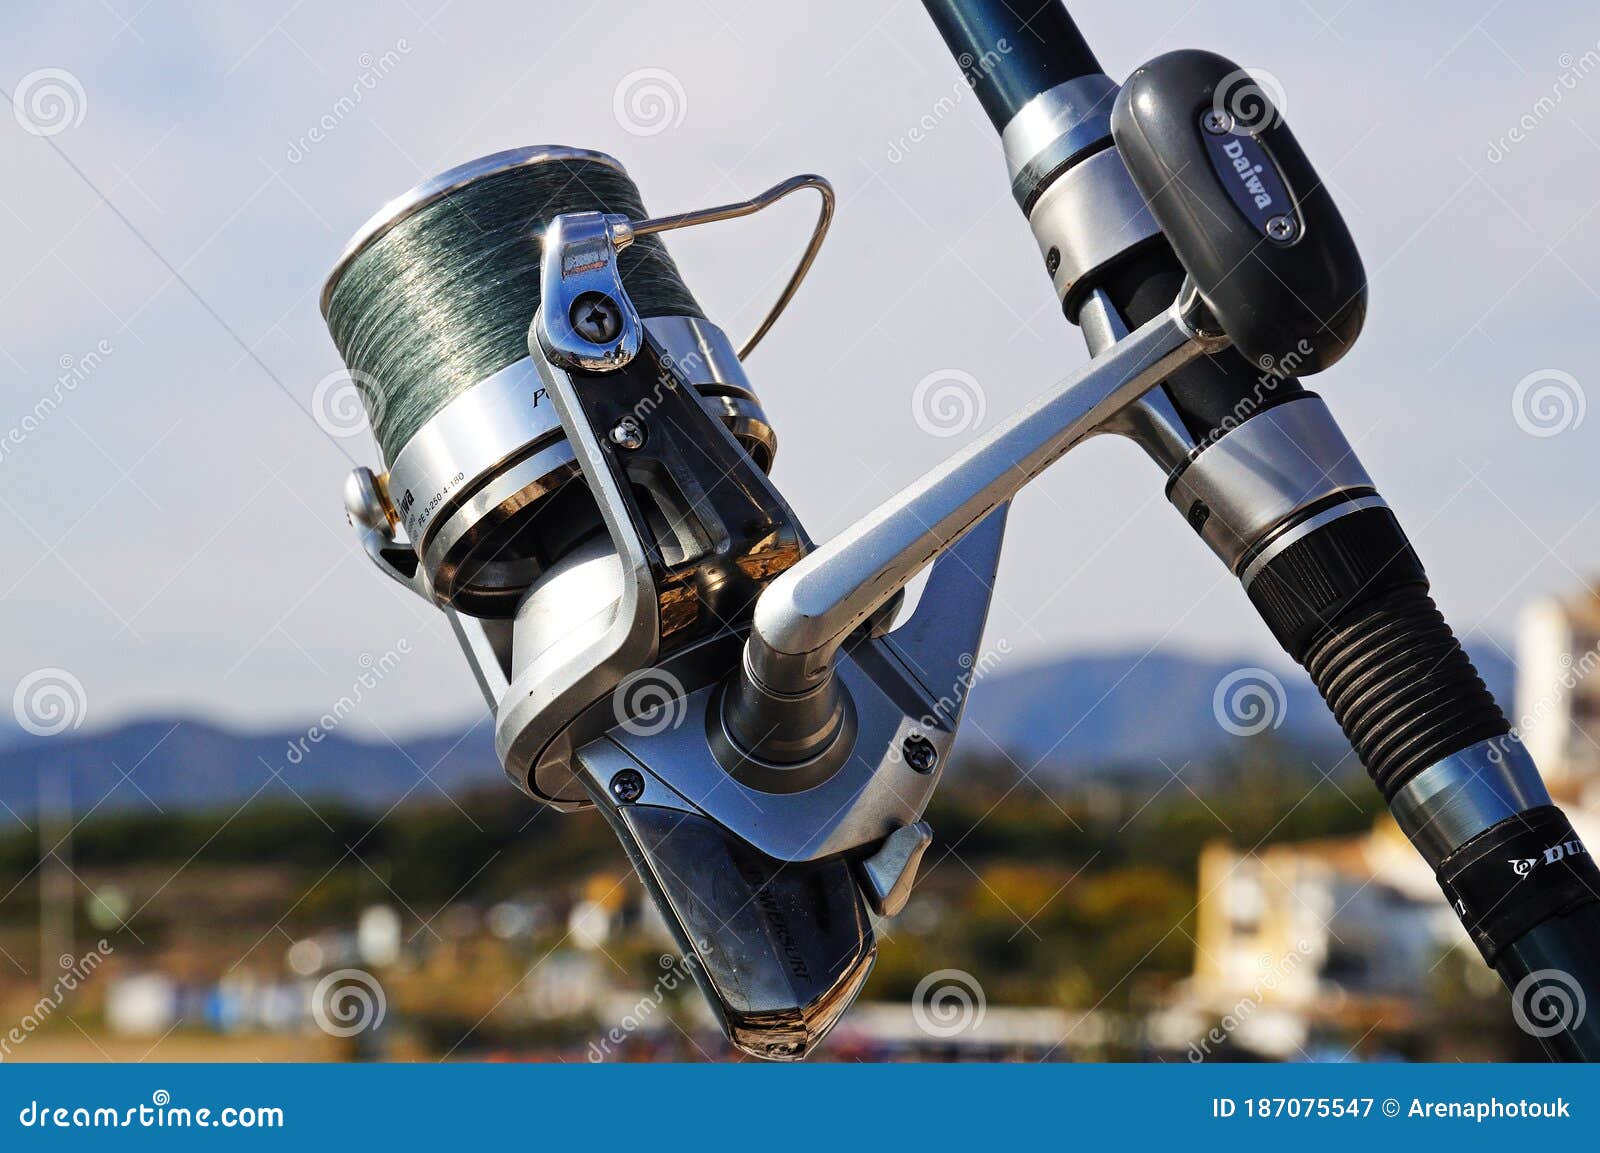 https://thumbs.dreamstime.com/z/span-marbella-spain-march-fishing-reel-rod-beach-to-rear-puerto-cabopino-187075547.jpg